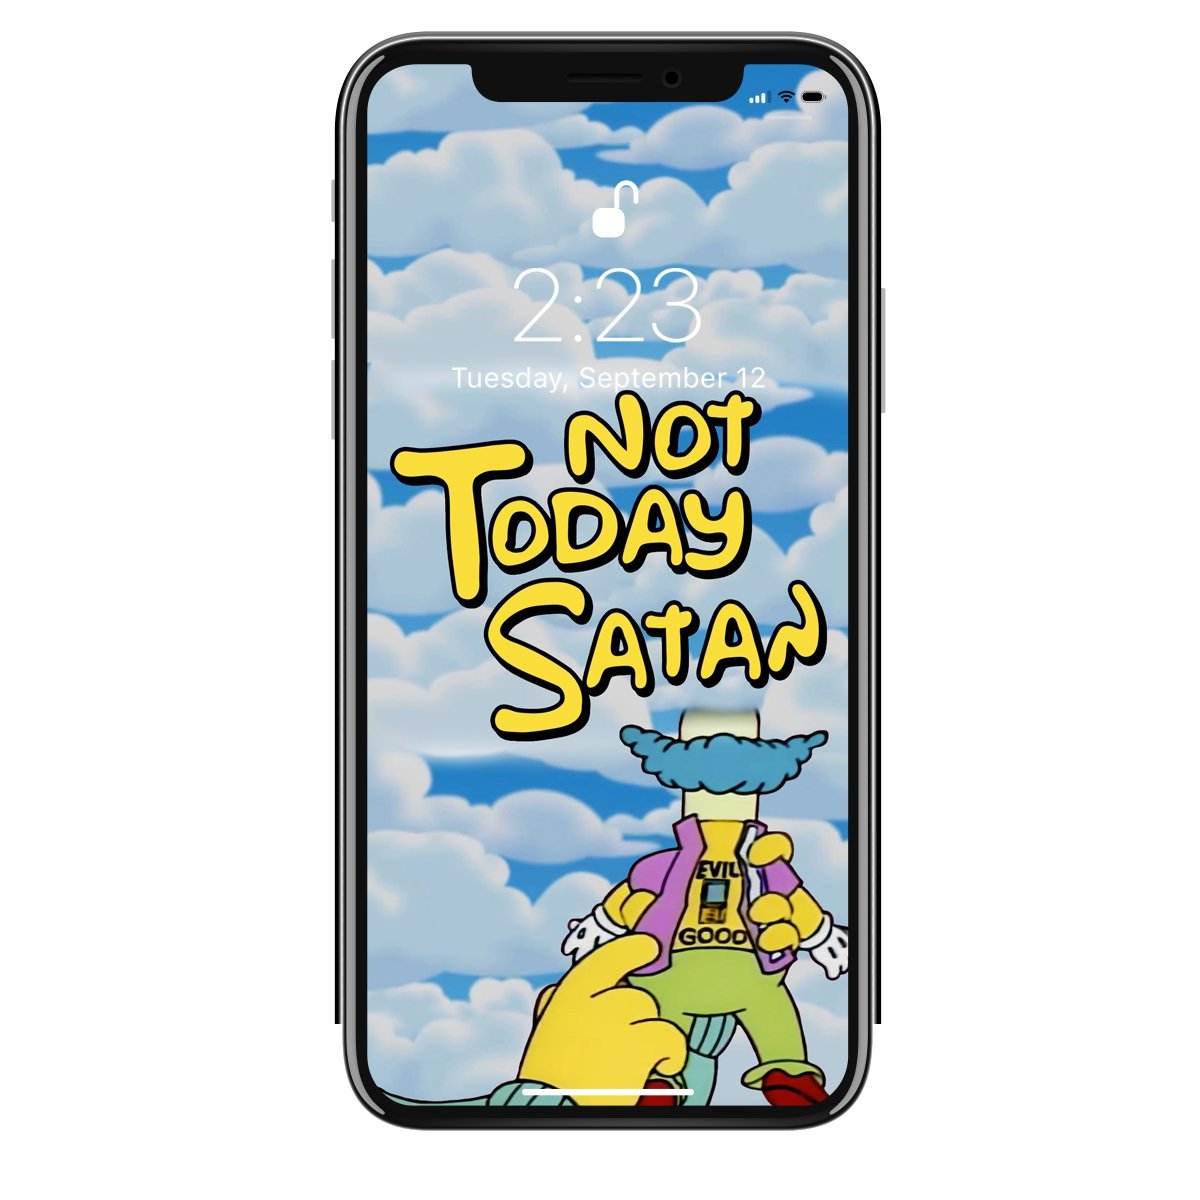 CXXII "Not Today Satan" Phone Wallpaper